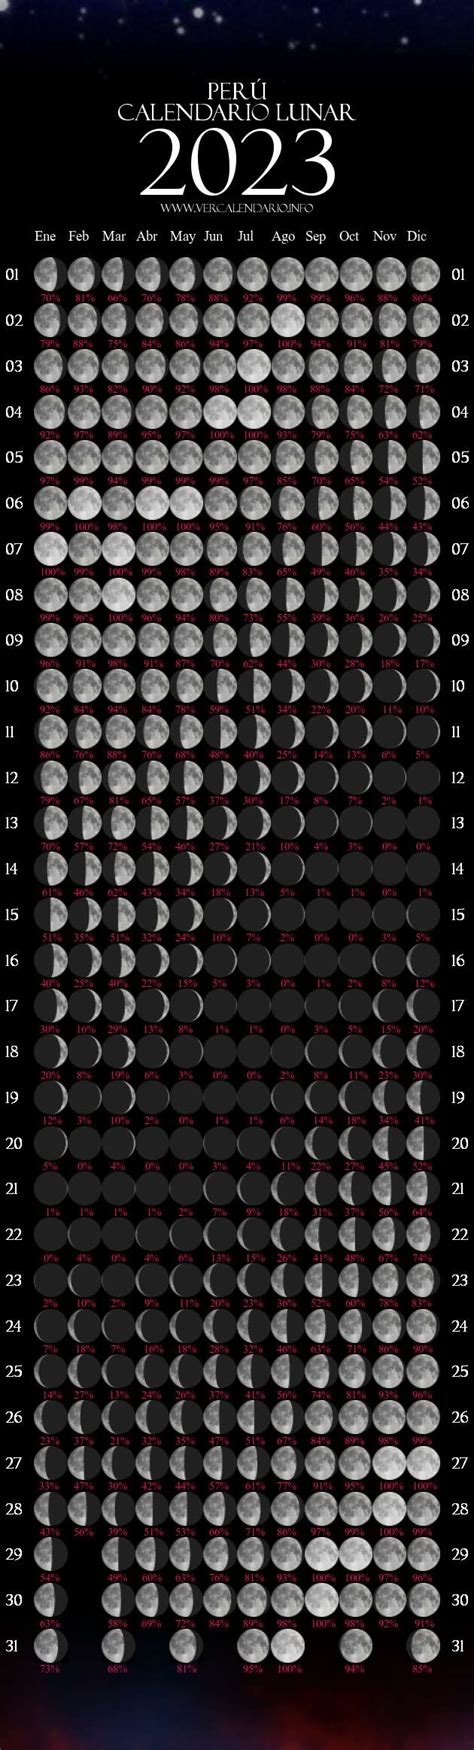 Calendario Lunar 2023 Perú